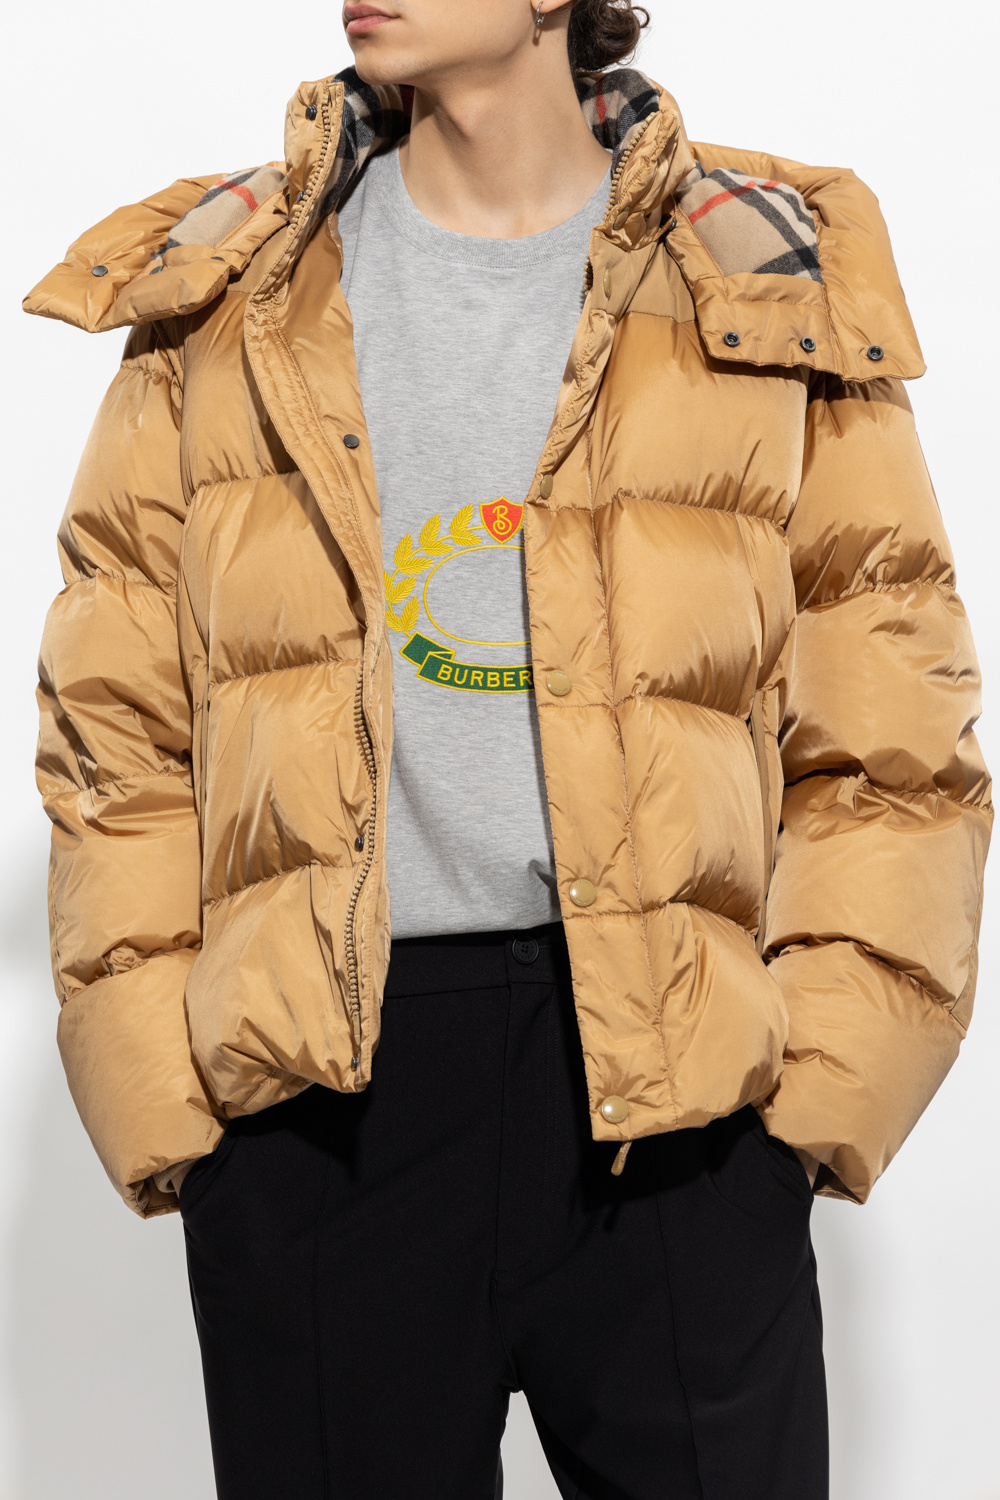 burberry Foulard ‘Leeds’ jacket with detachable sleeves